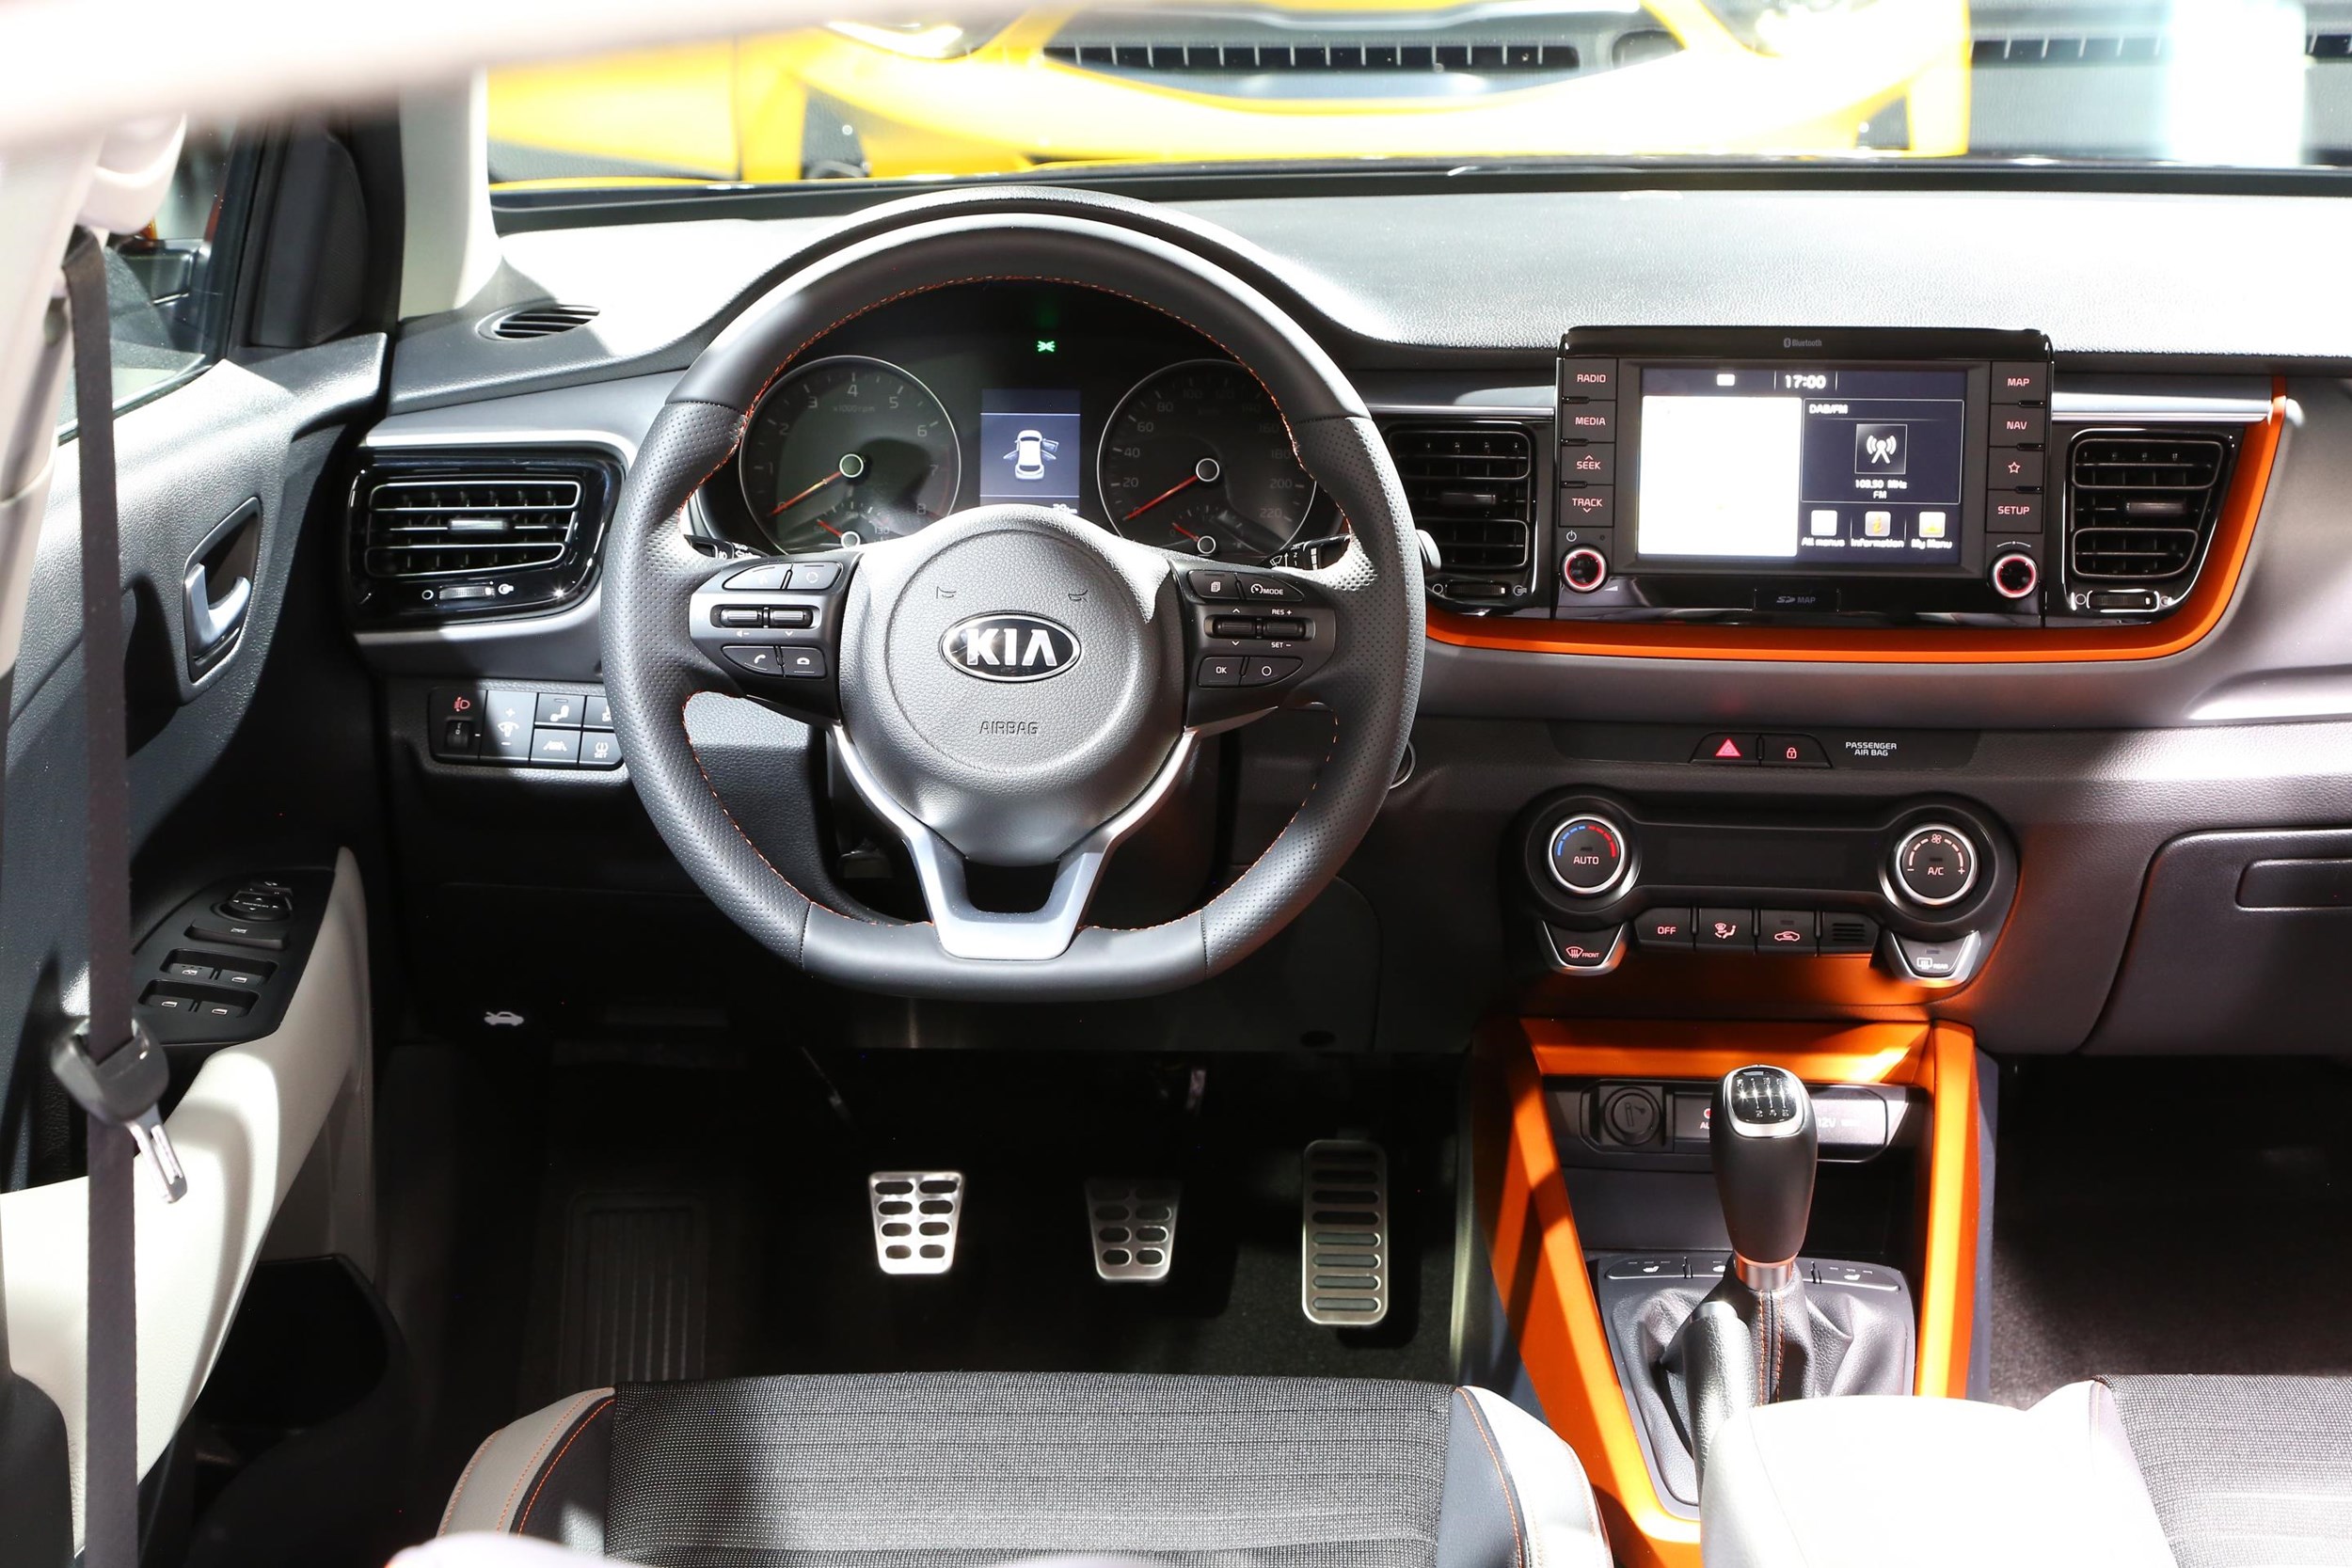 First look: Kia Stonic (video) | Company Car Reviews